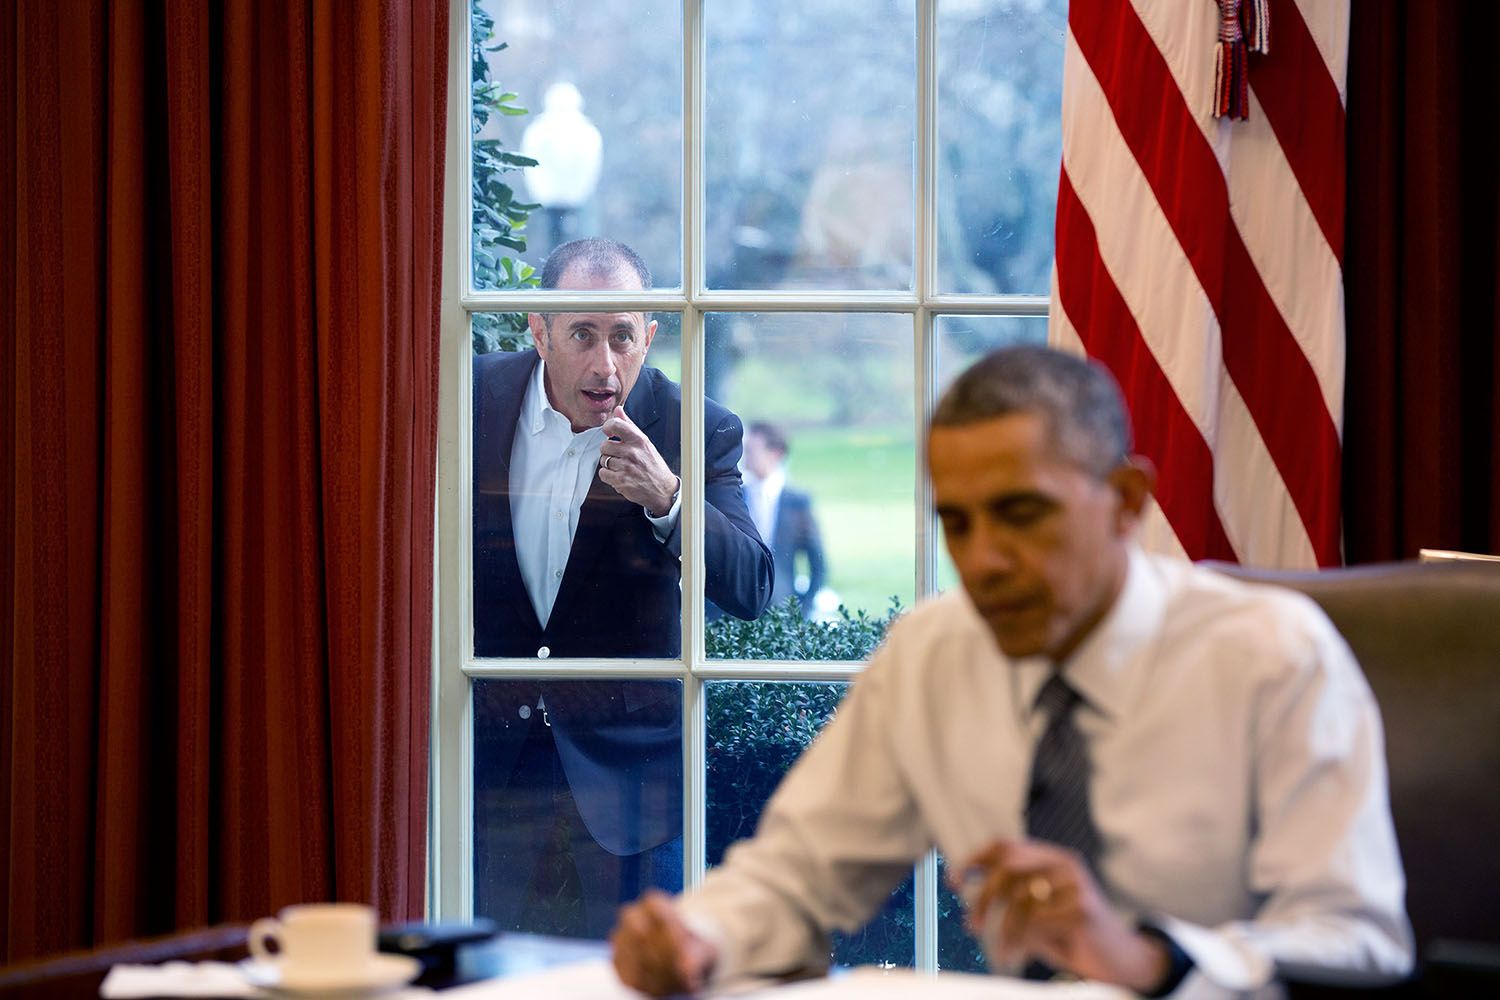 Jerry_Seinfeld_knocks_on_the_Oval_Office_window.jpg